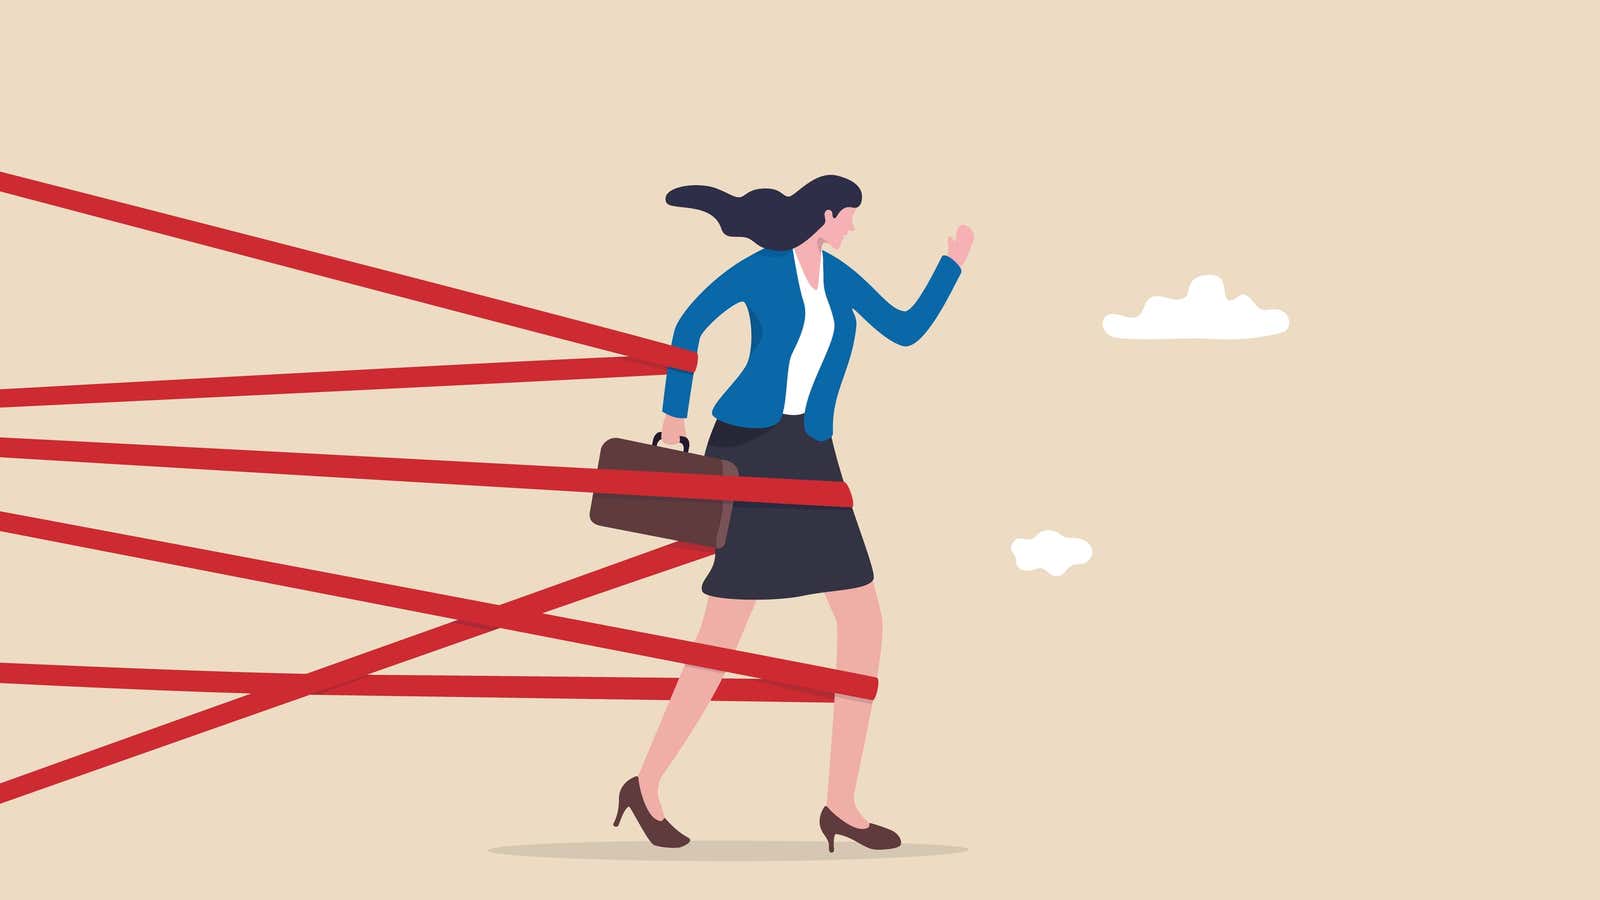 3 tactics to break barriers for women in tech